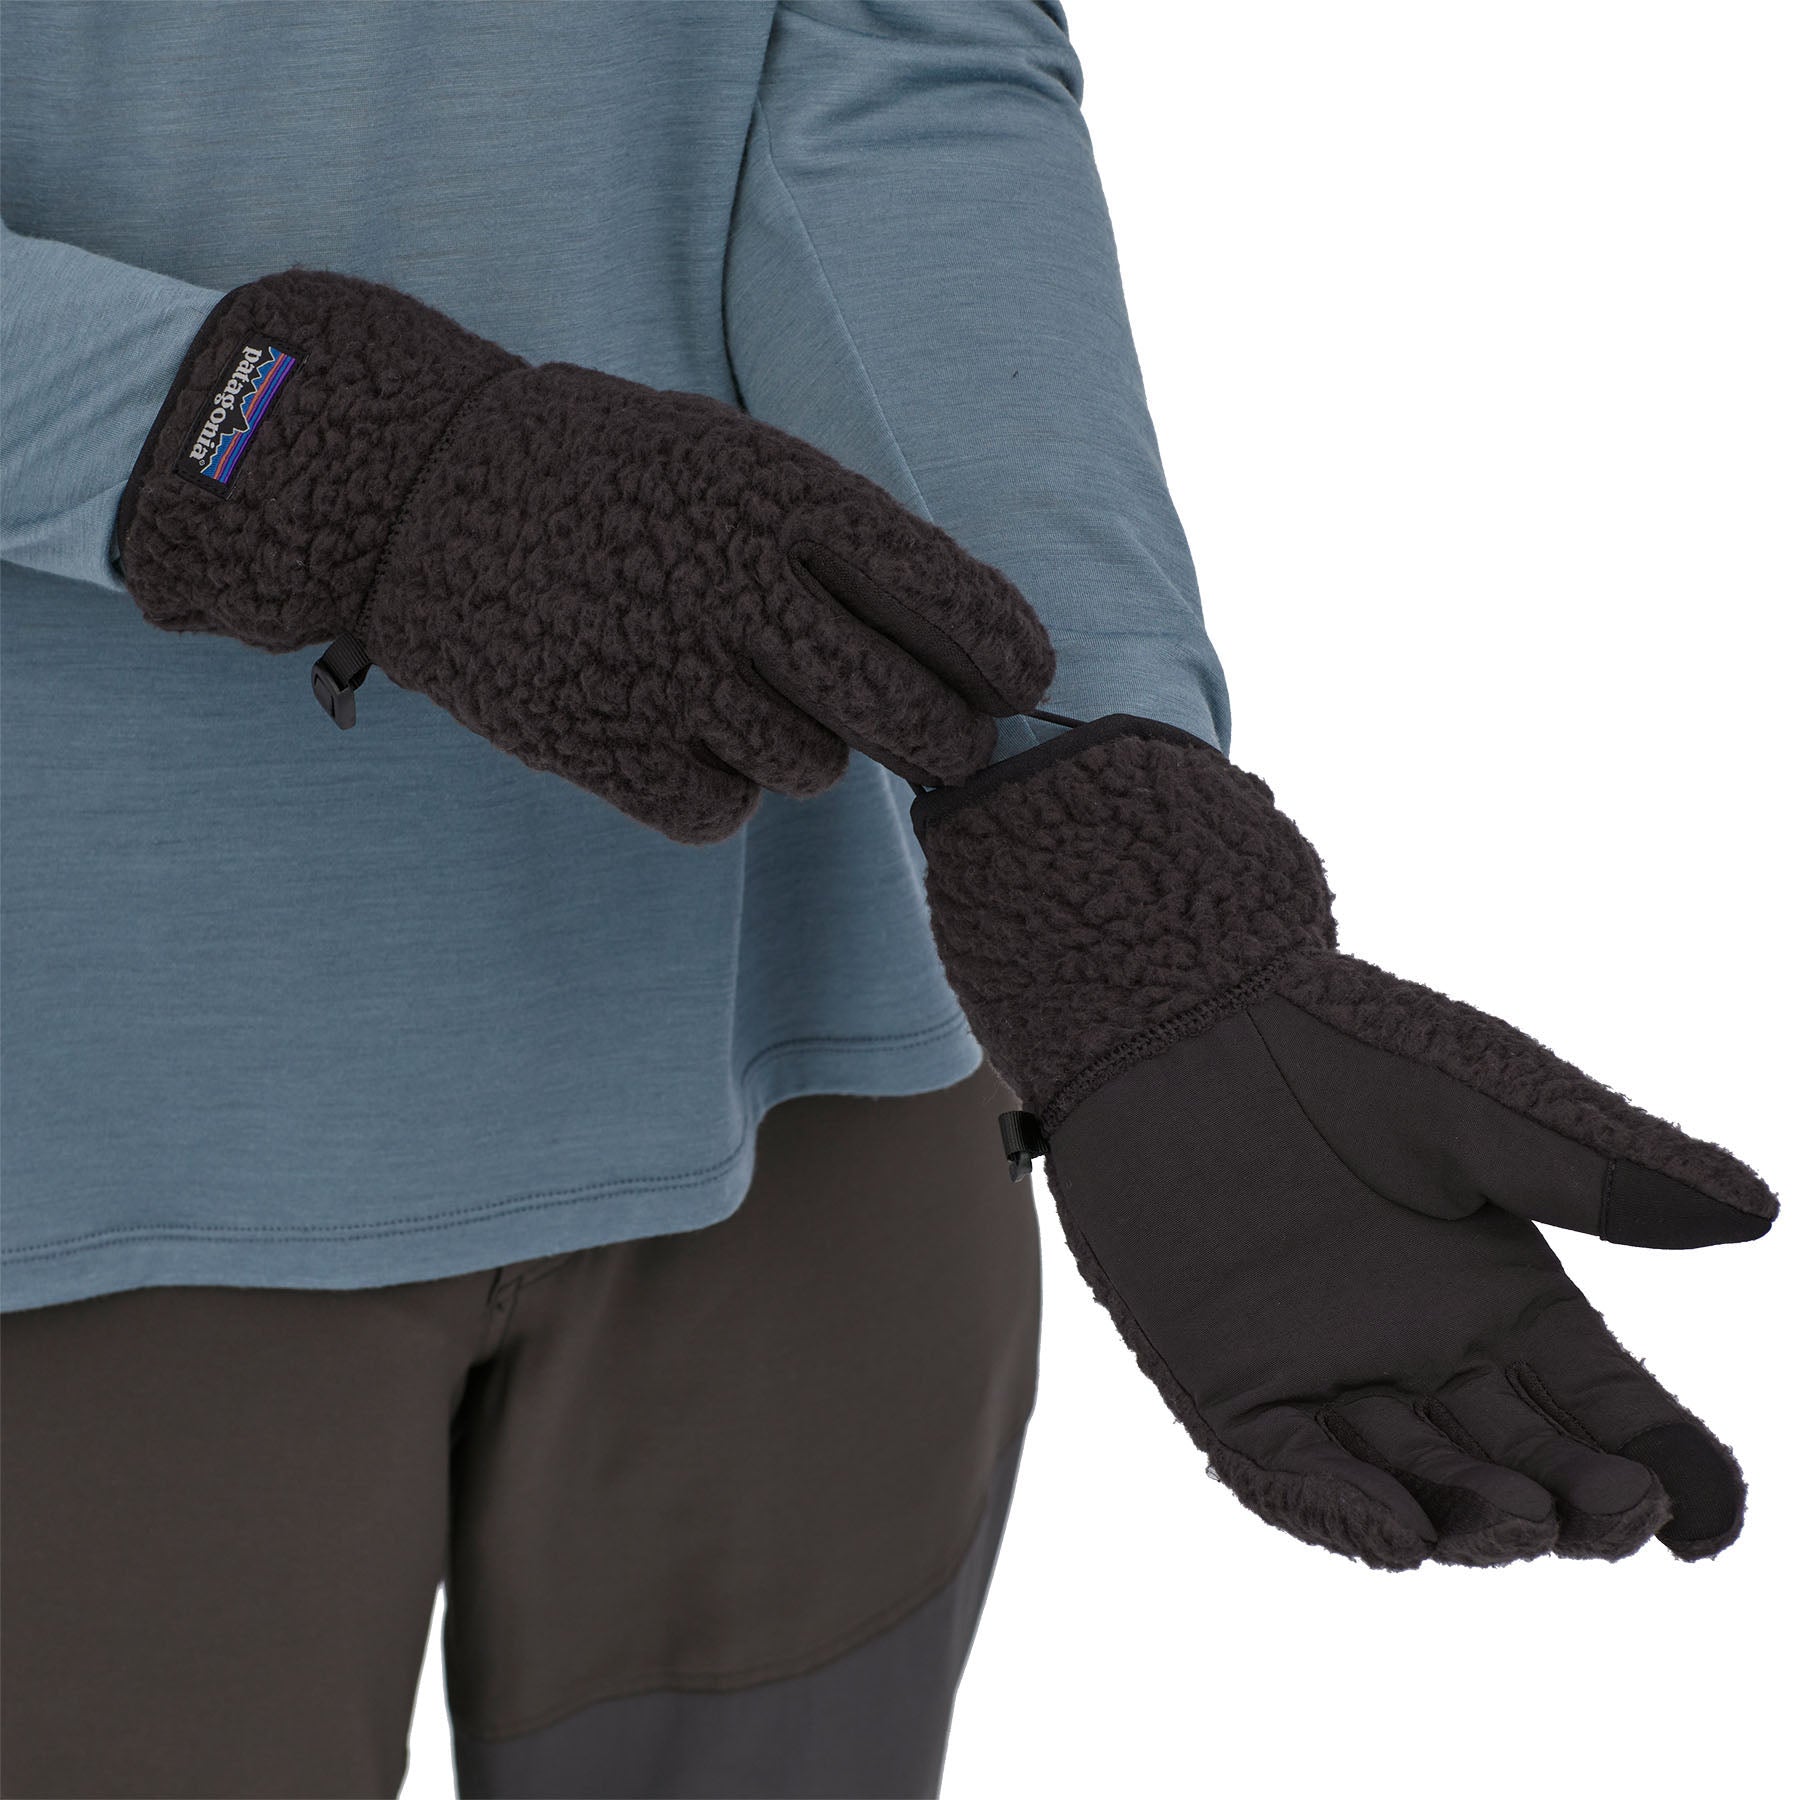 Patagonia Retro Pile Gloves